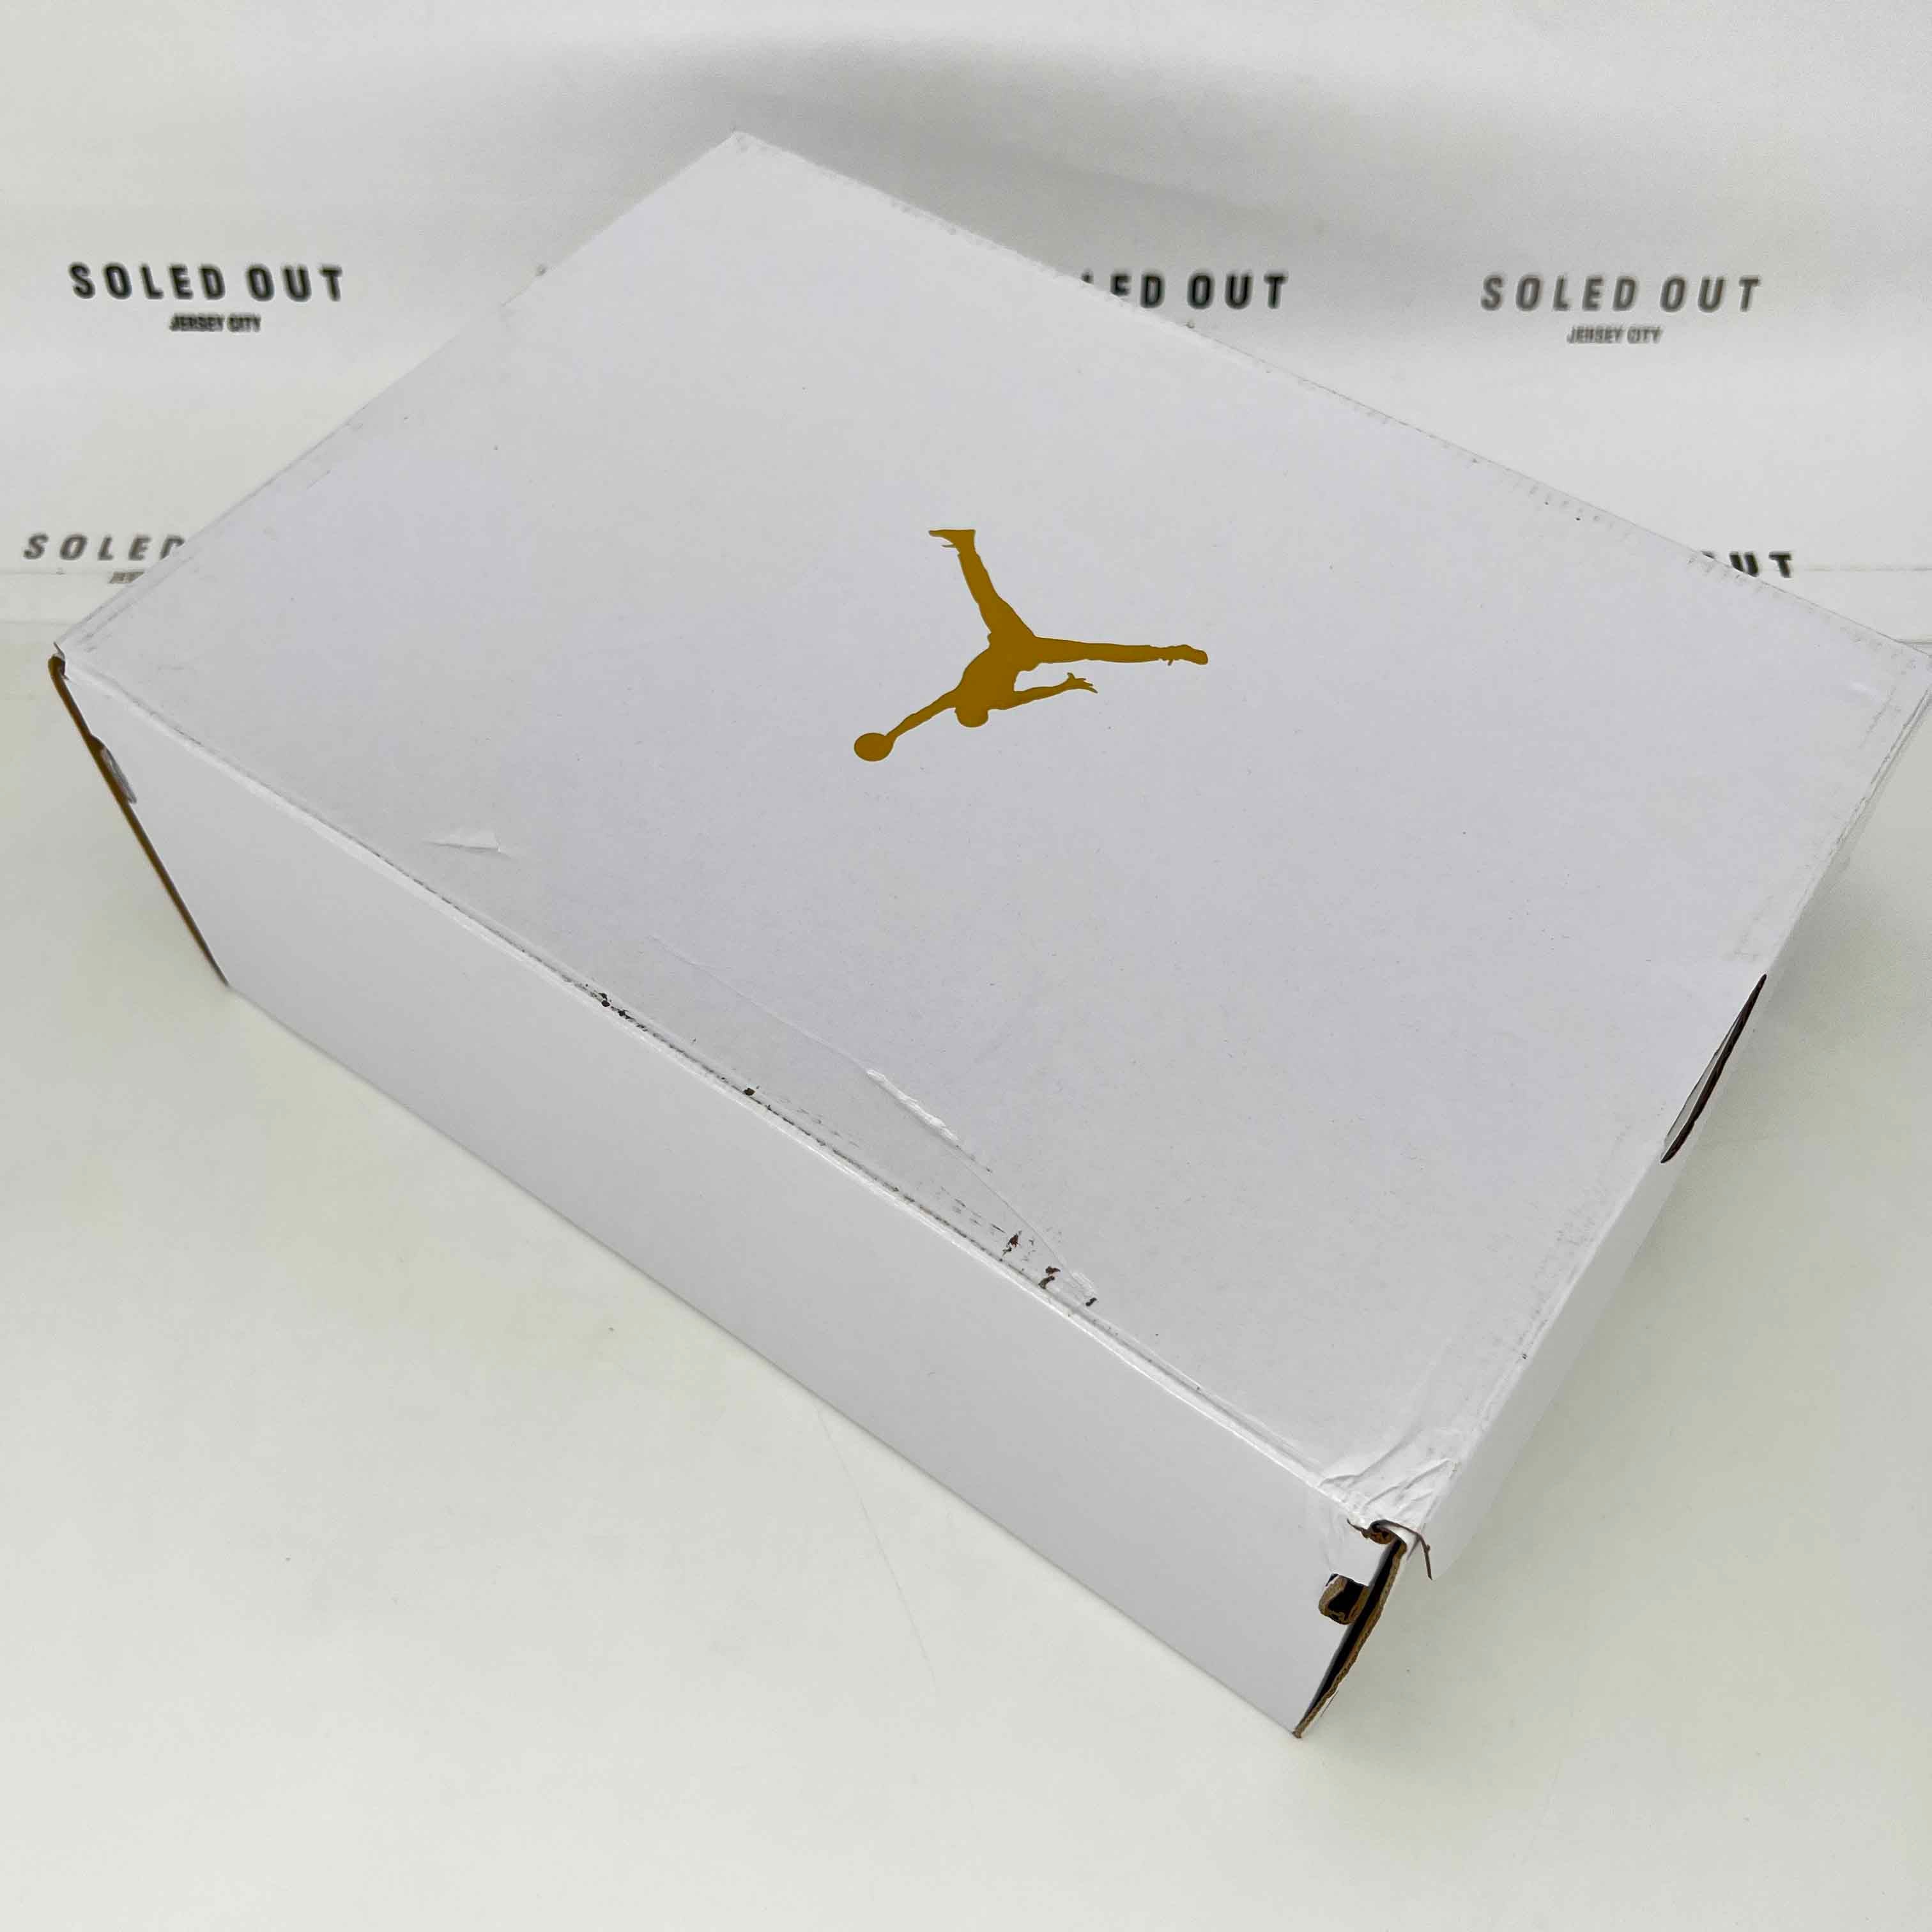 Air Jordan (W) 3 Retro "Lucky Green" 2023 New Size 6W